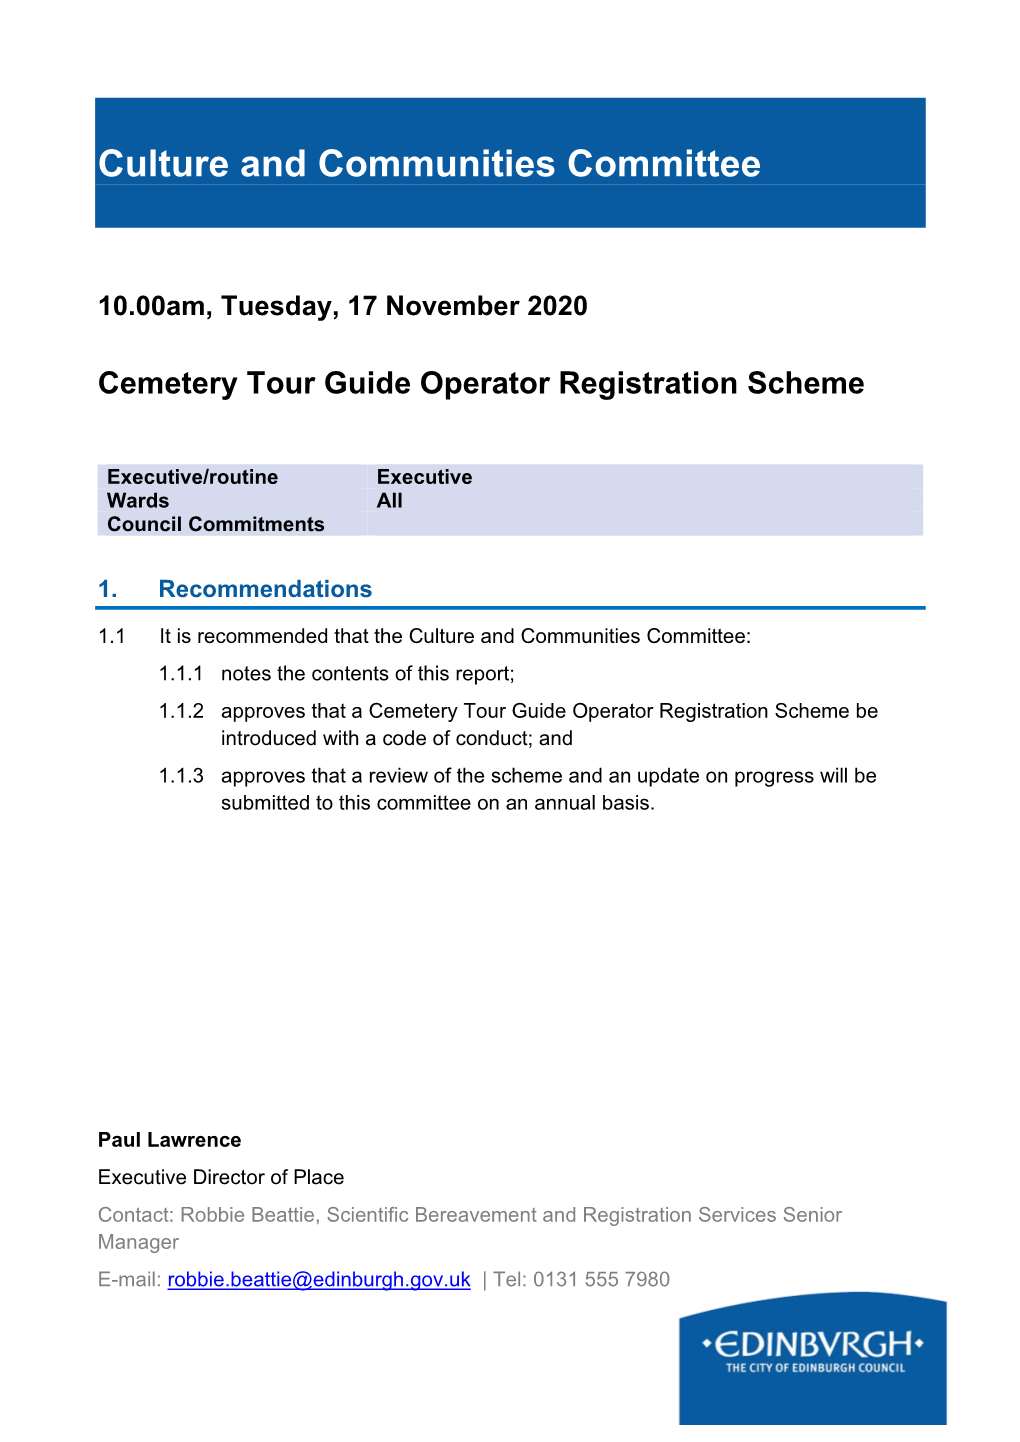 Cemetery Tour Guide Operator Registration Scheme